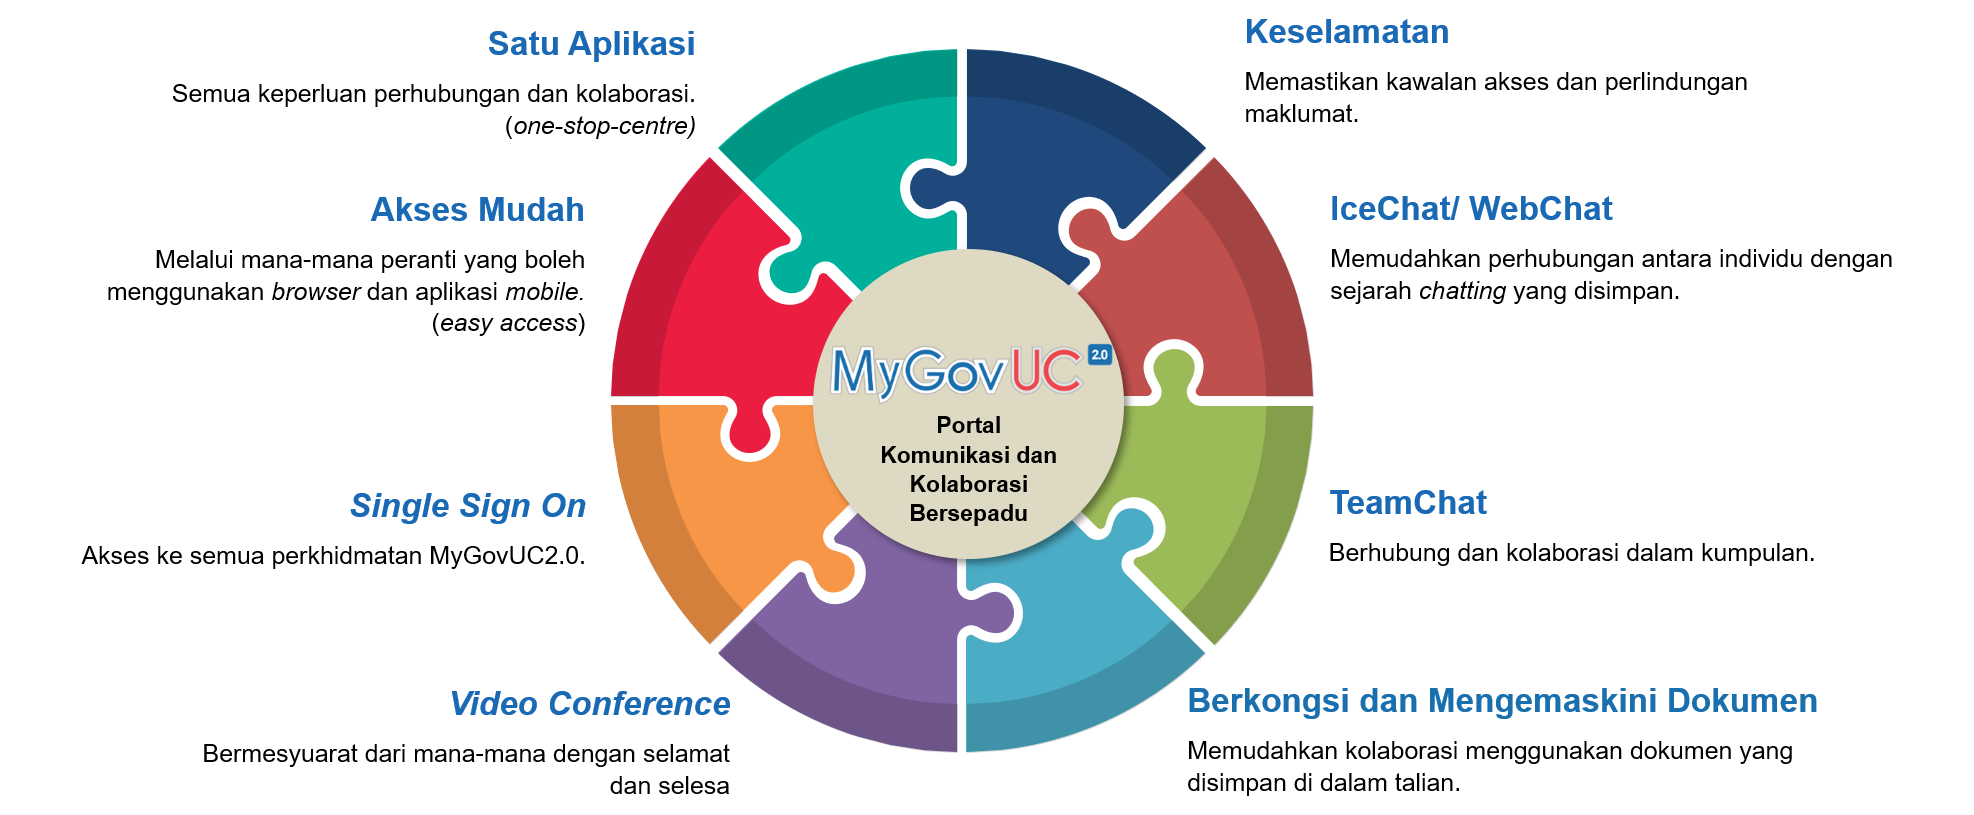 Mengenai MyGovUC 2.0